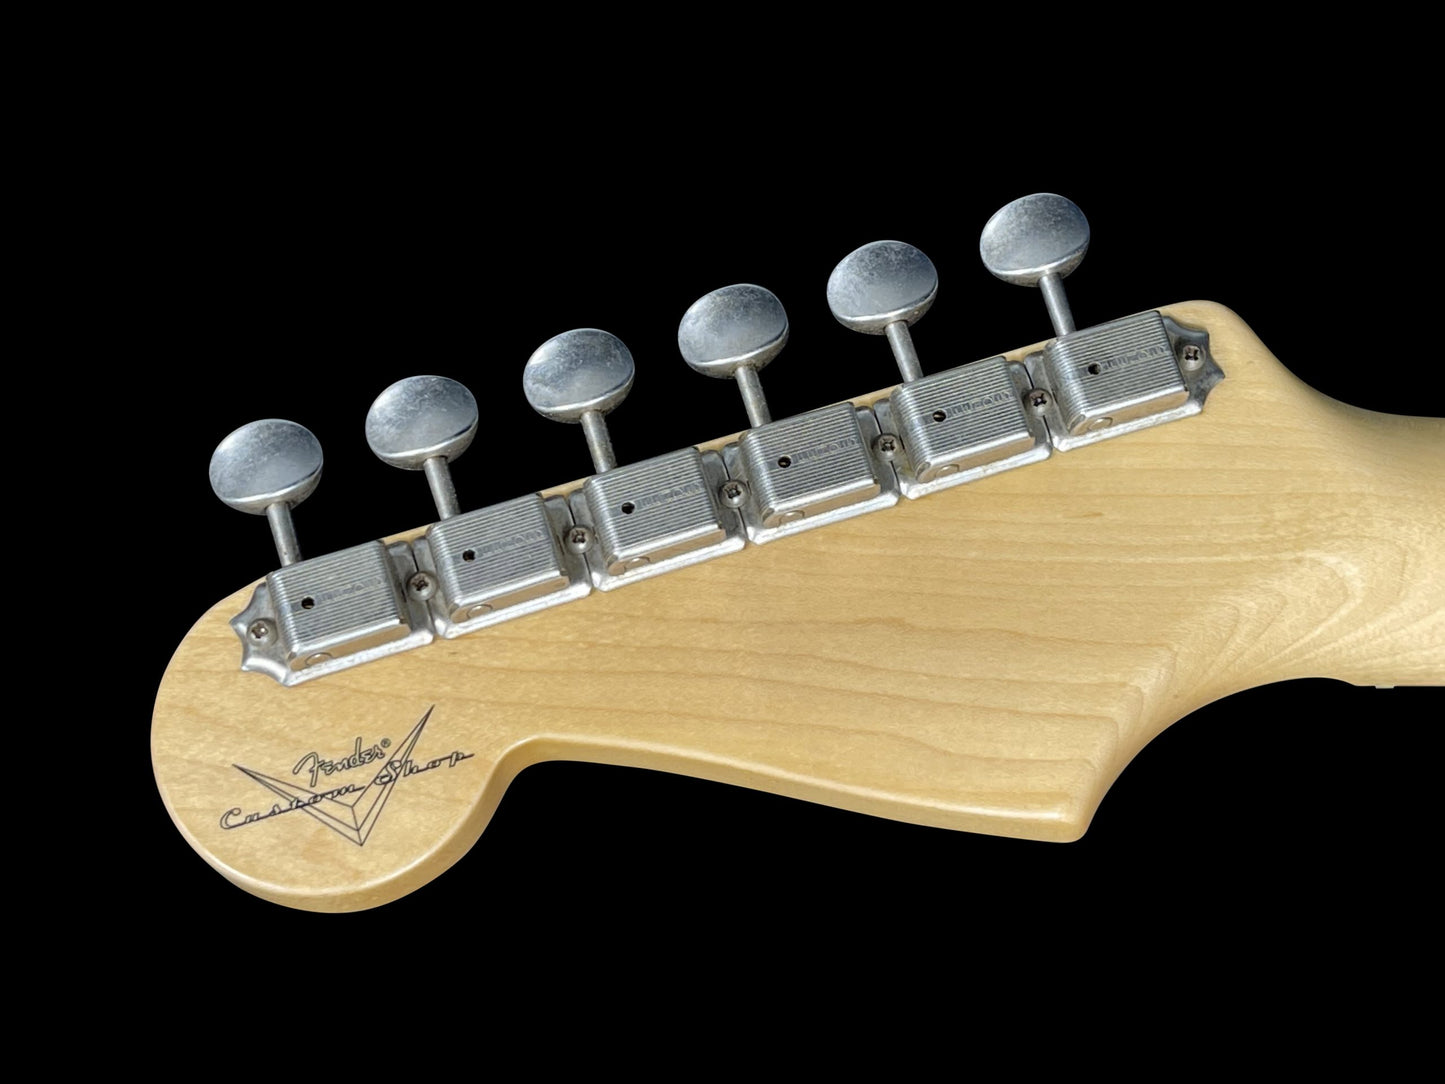 Fender Stratocaster 1955 Custom Shop 55 Reissue Strat Journeyman Relic 2022 - 2 Tone Sunburst - Mint Condition